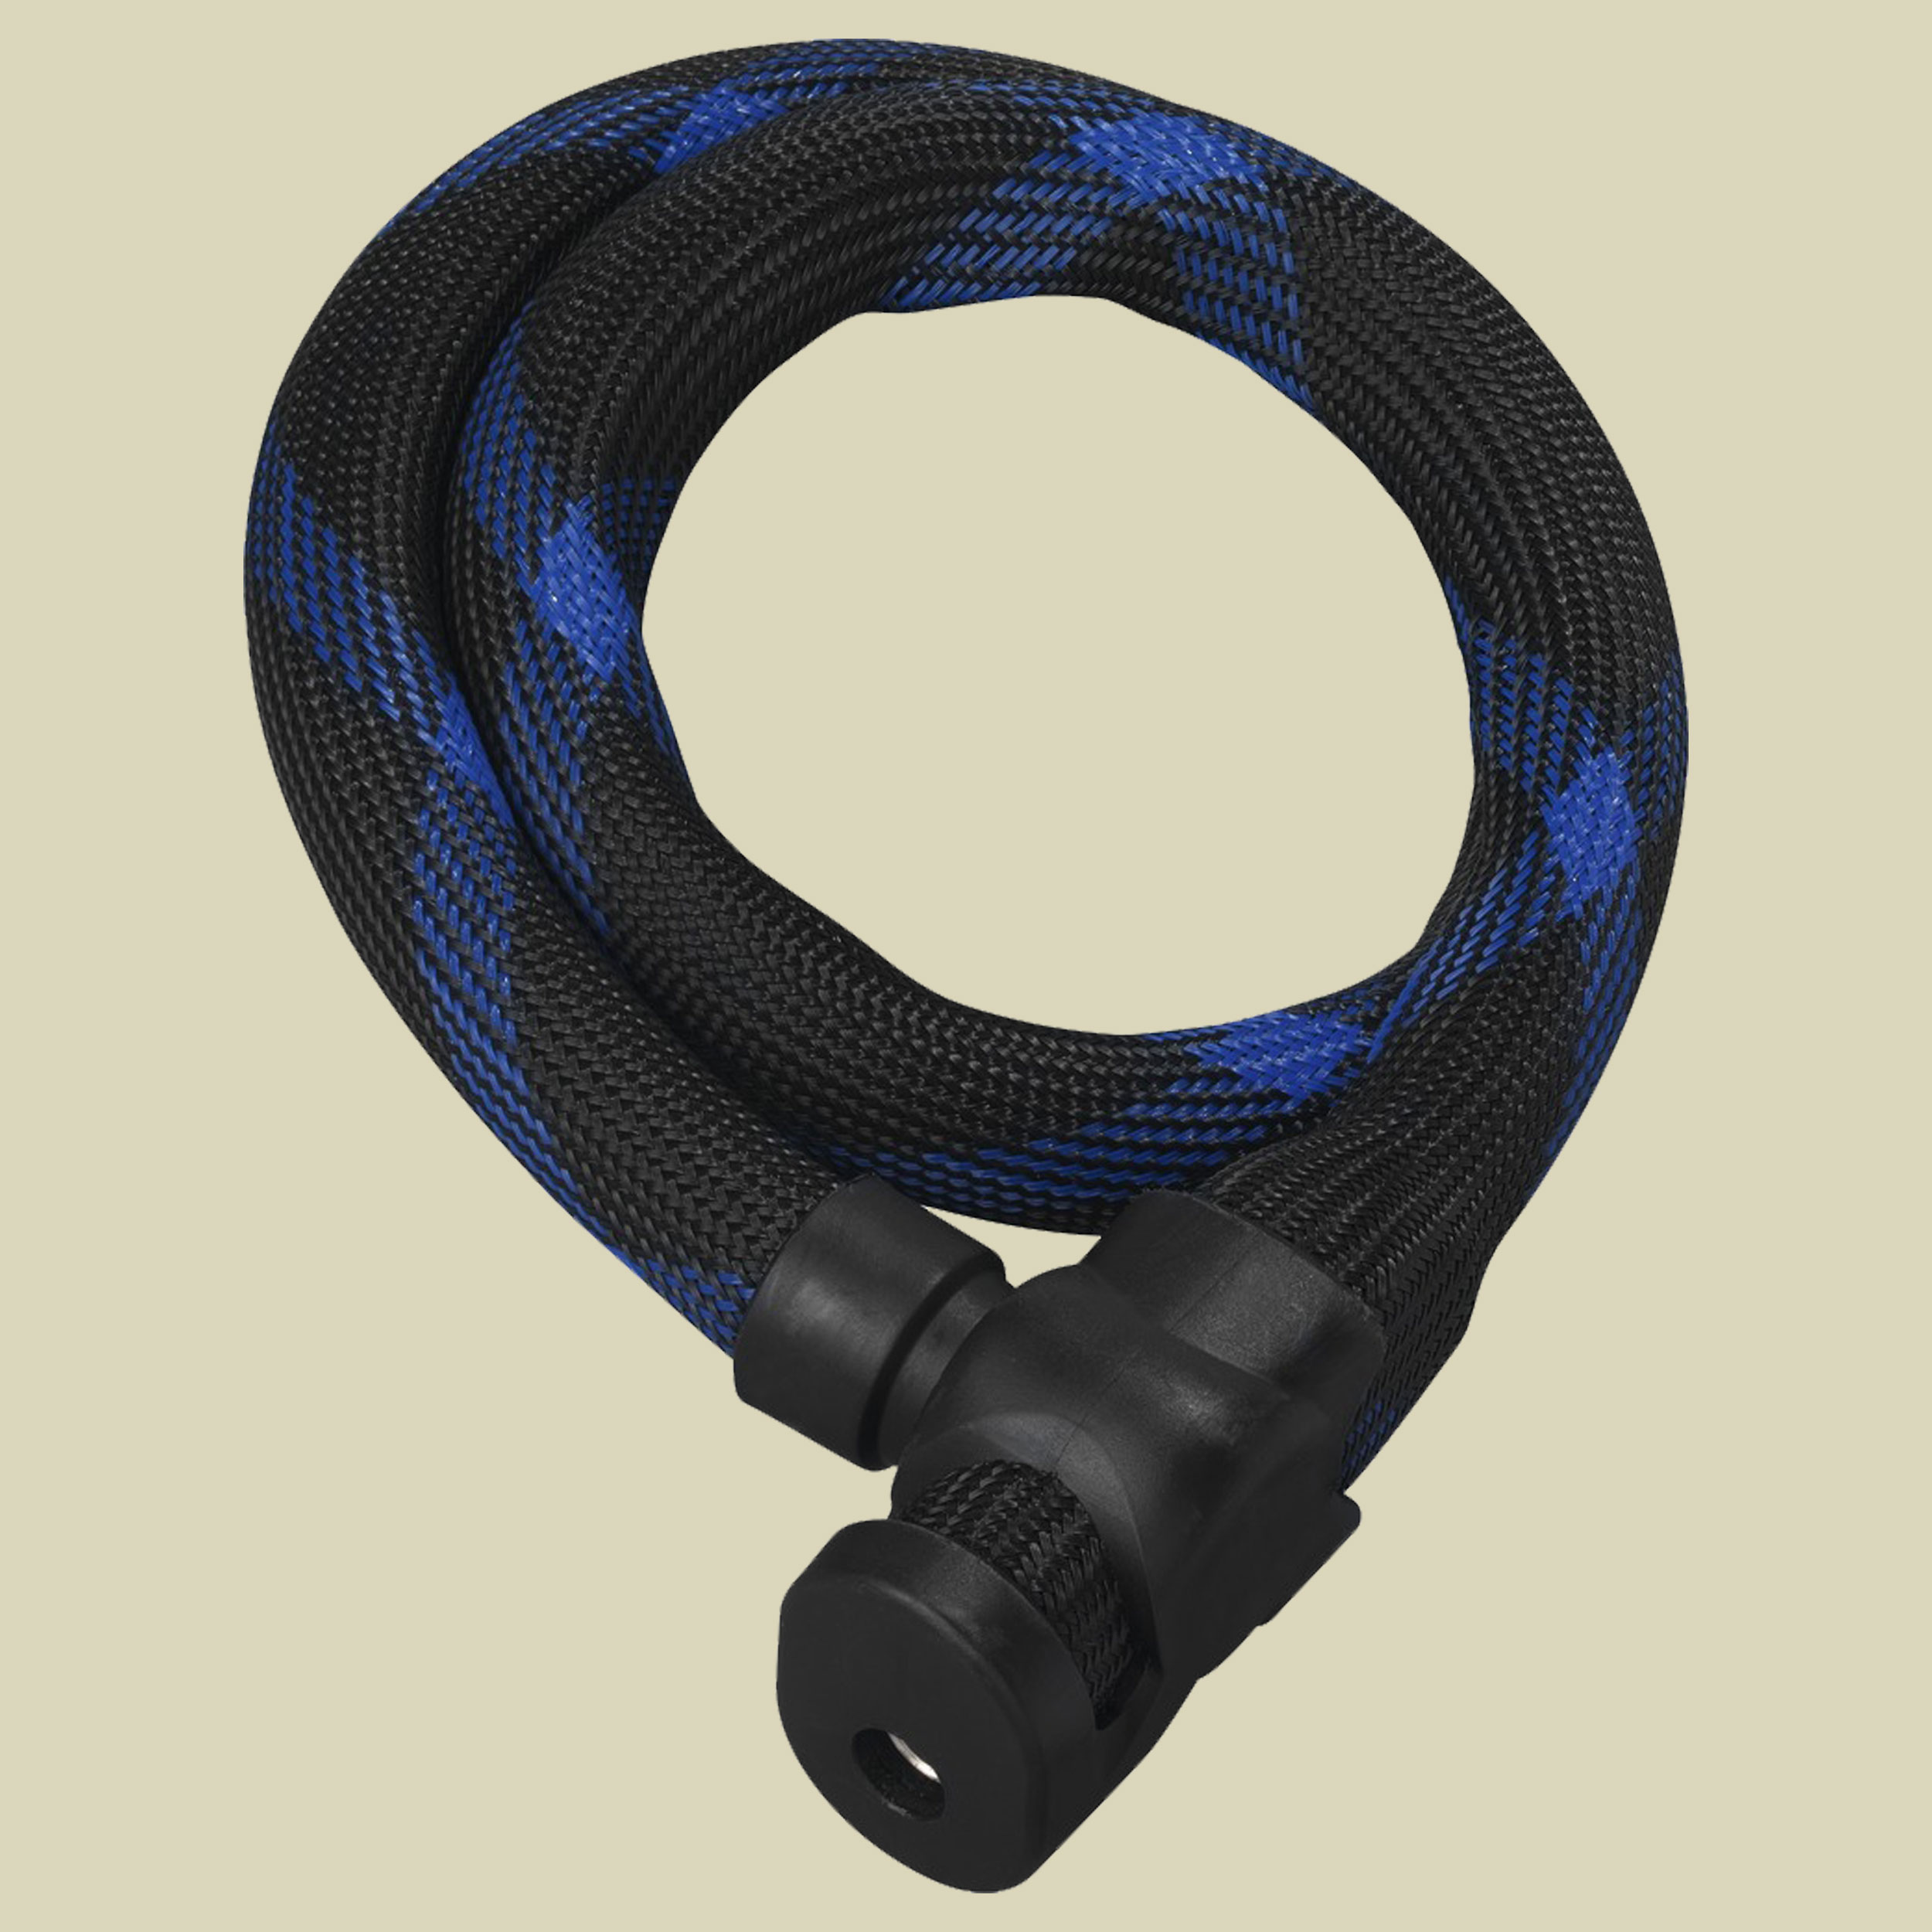 Ivera Cable 7220/85 Sicherheitslevel 6 Farbe black